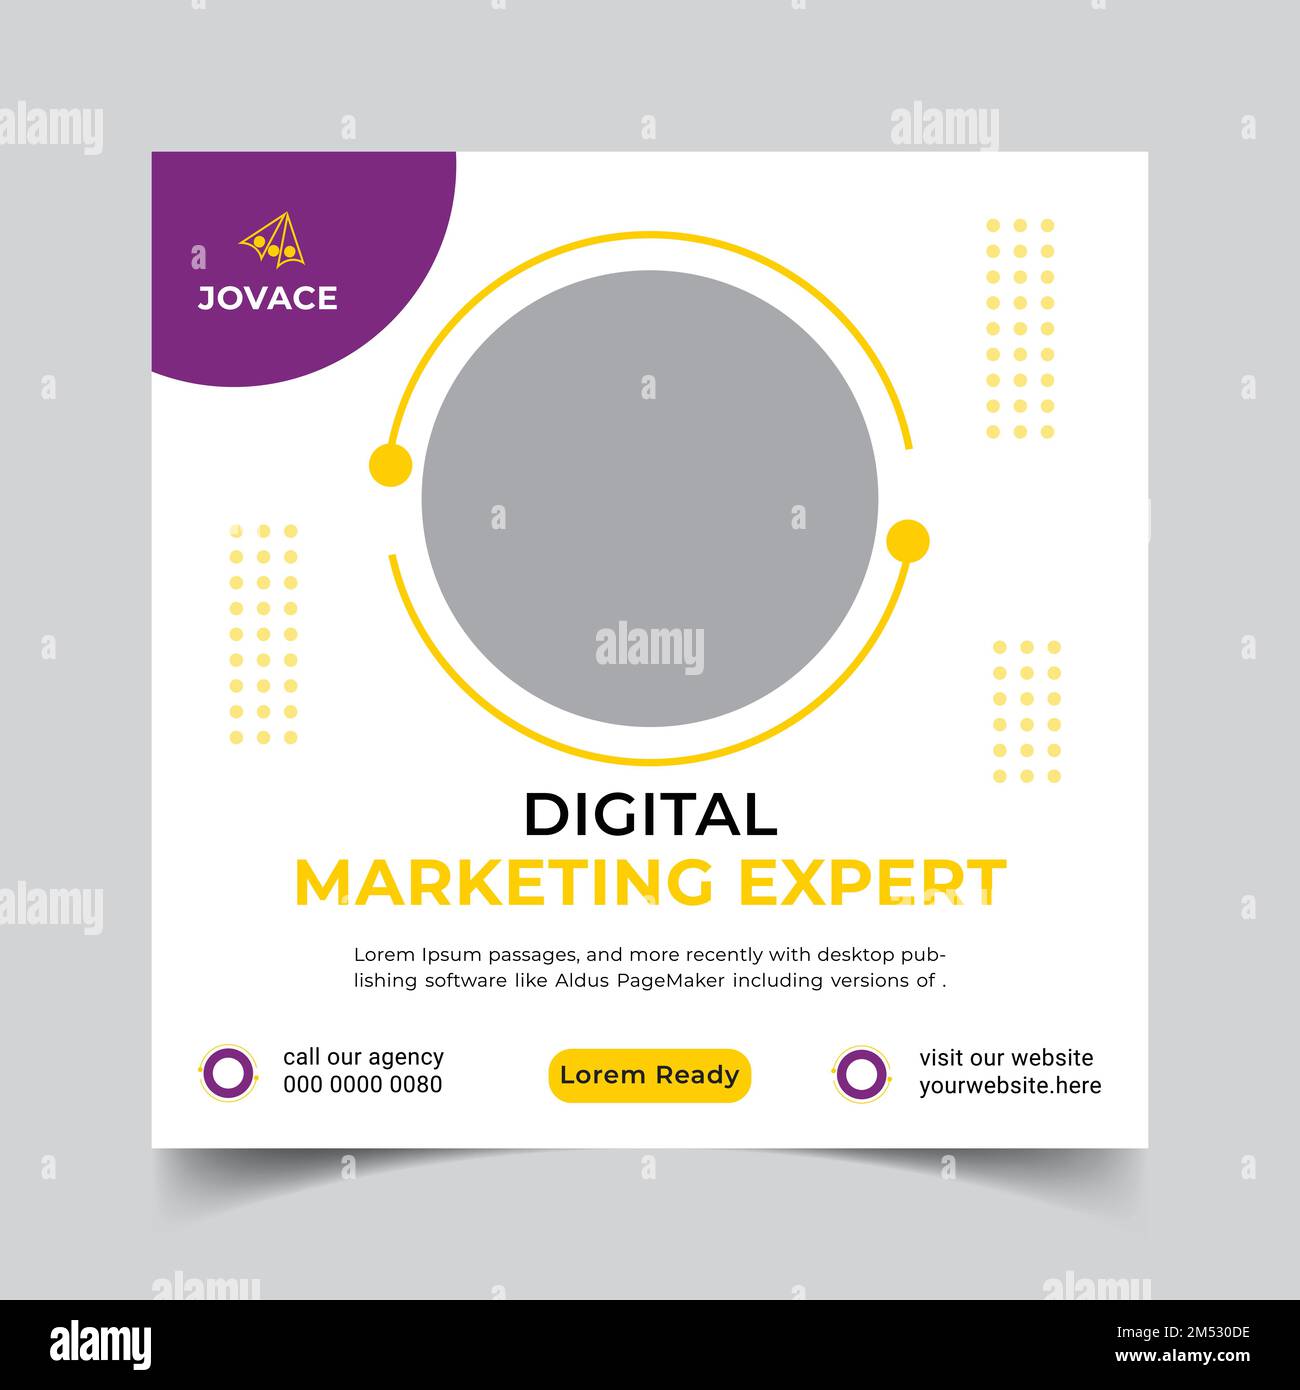 Digital marketing agency social media post design and web banner template. Stock Vector